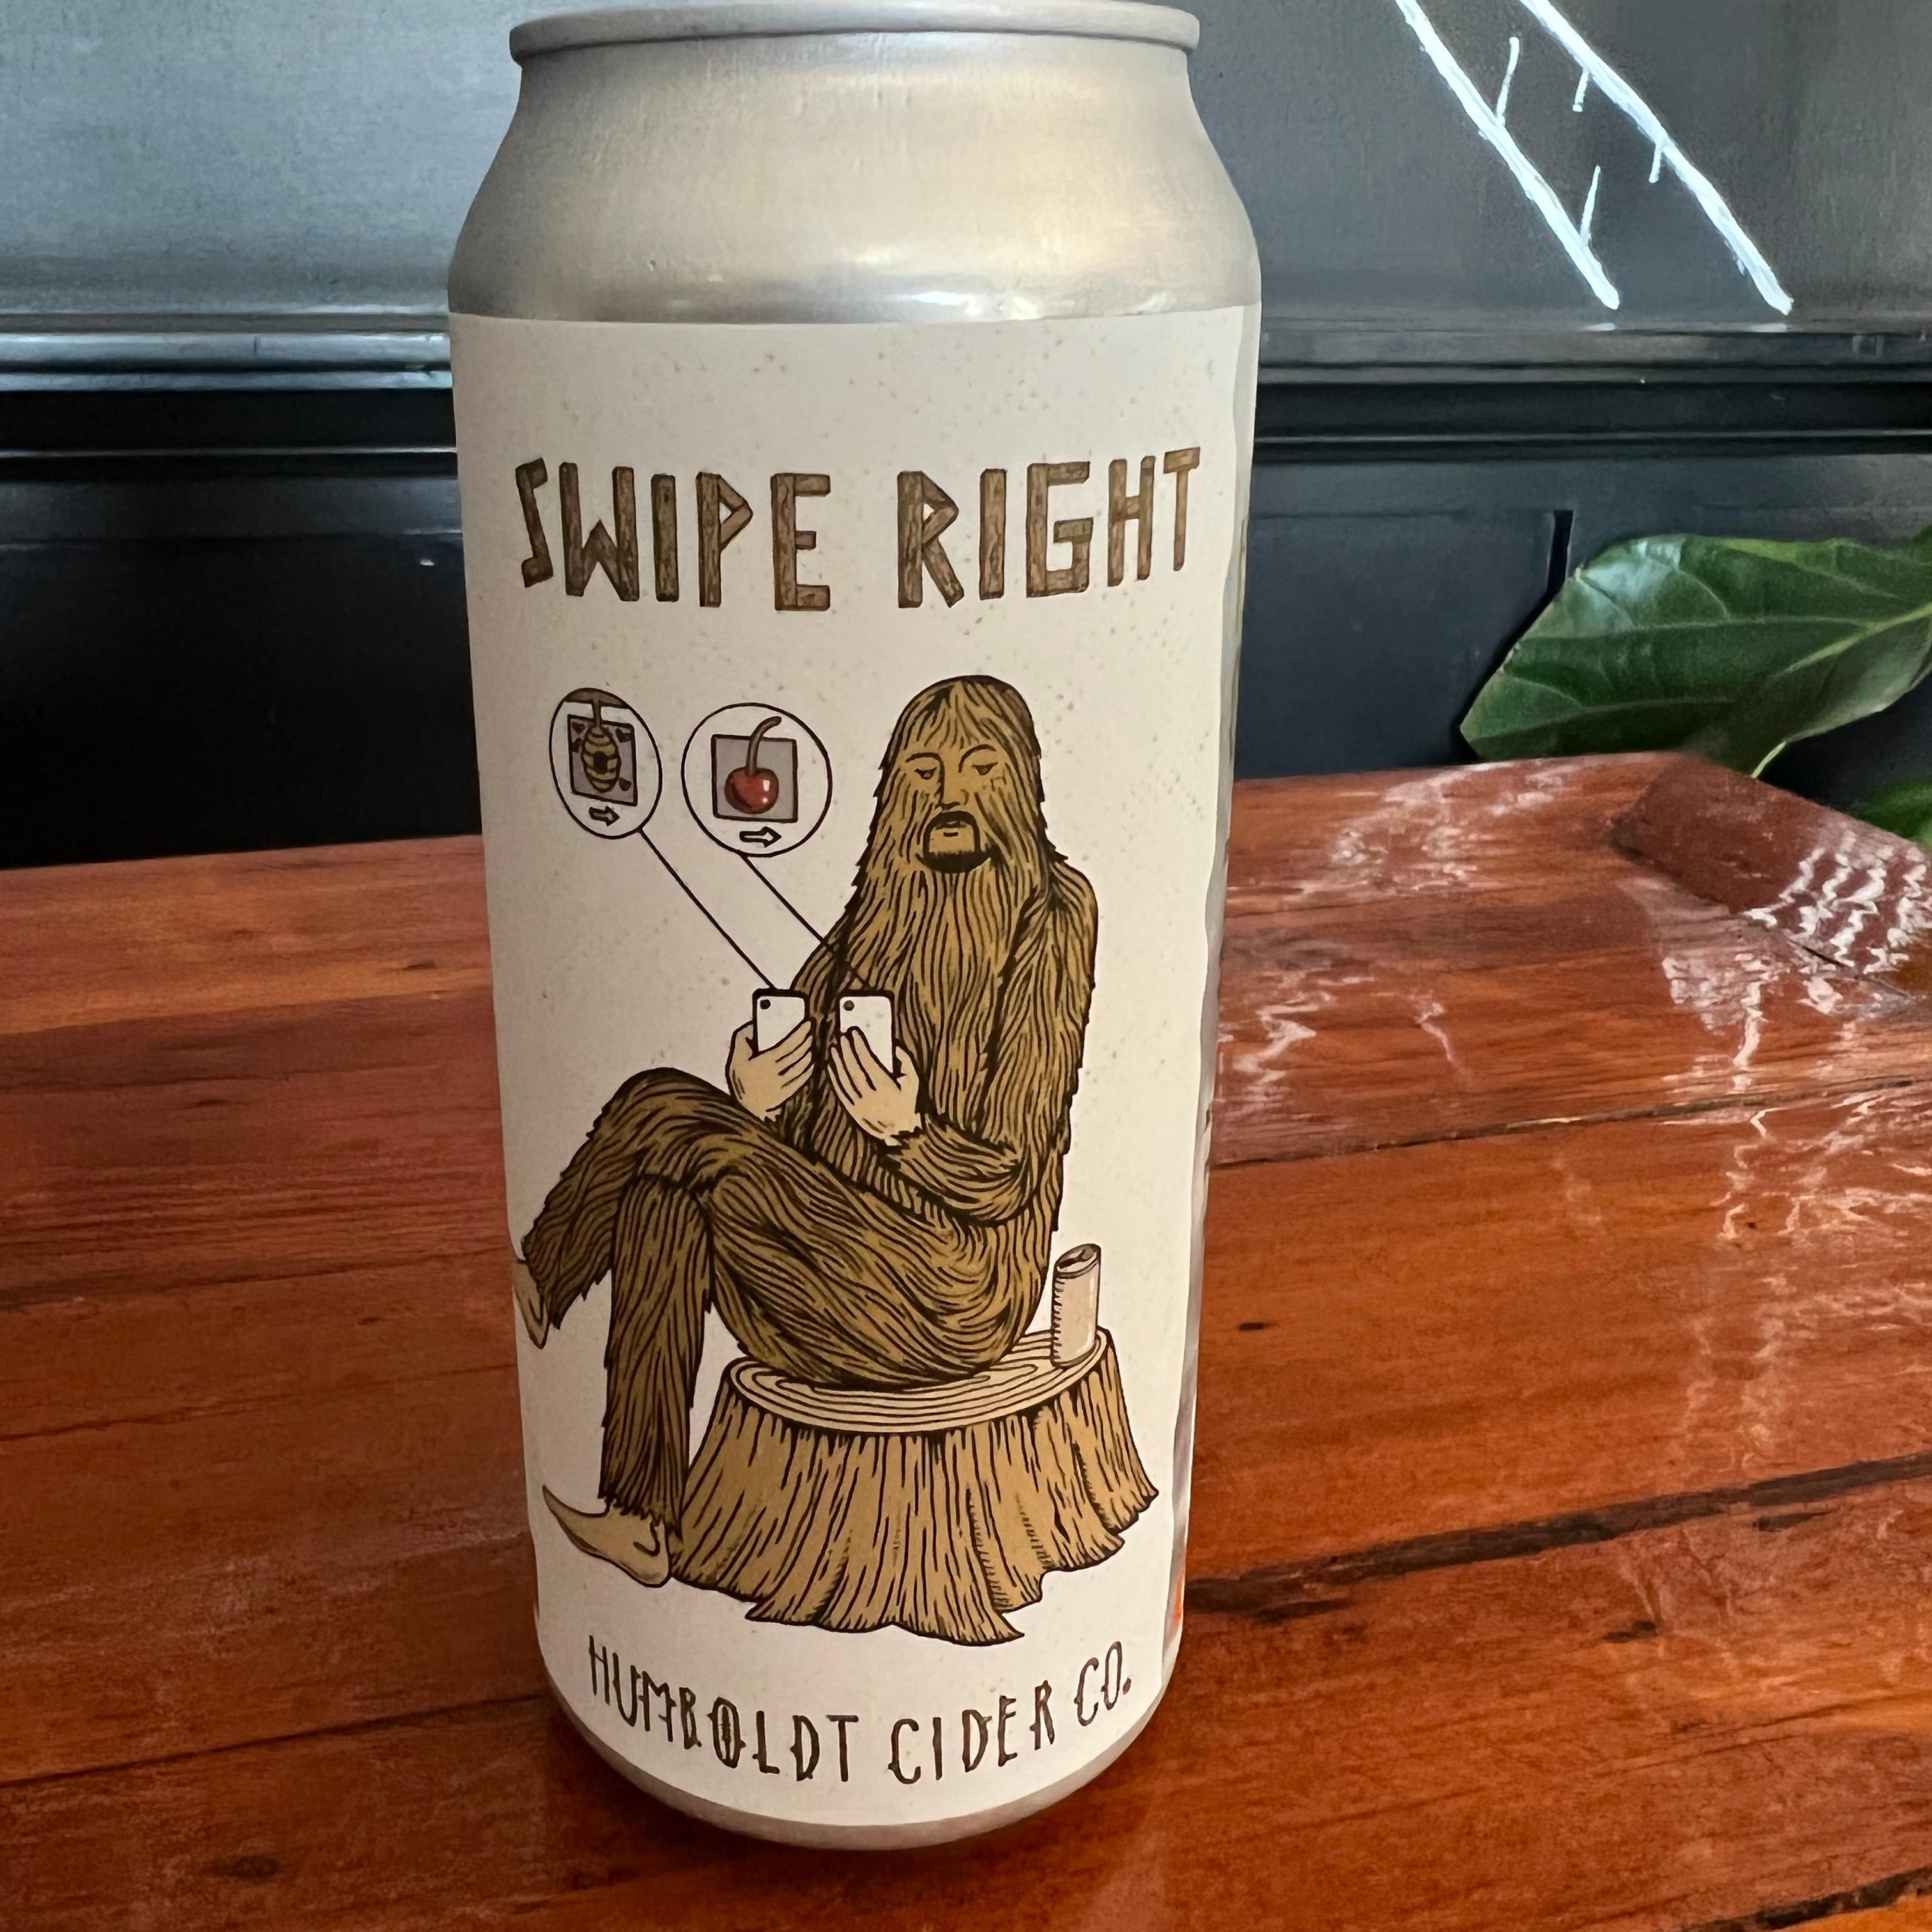 Humboldt Cider Co. - Swipe Right Cider